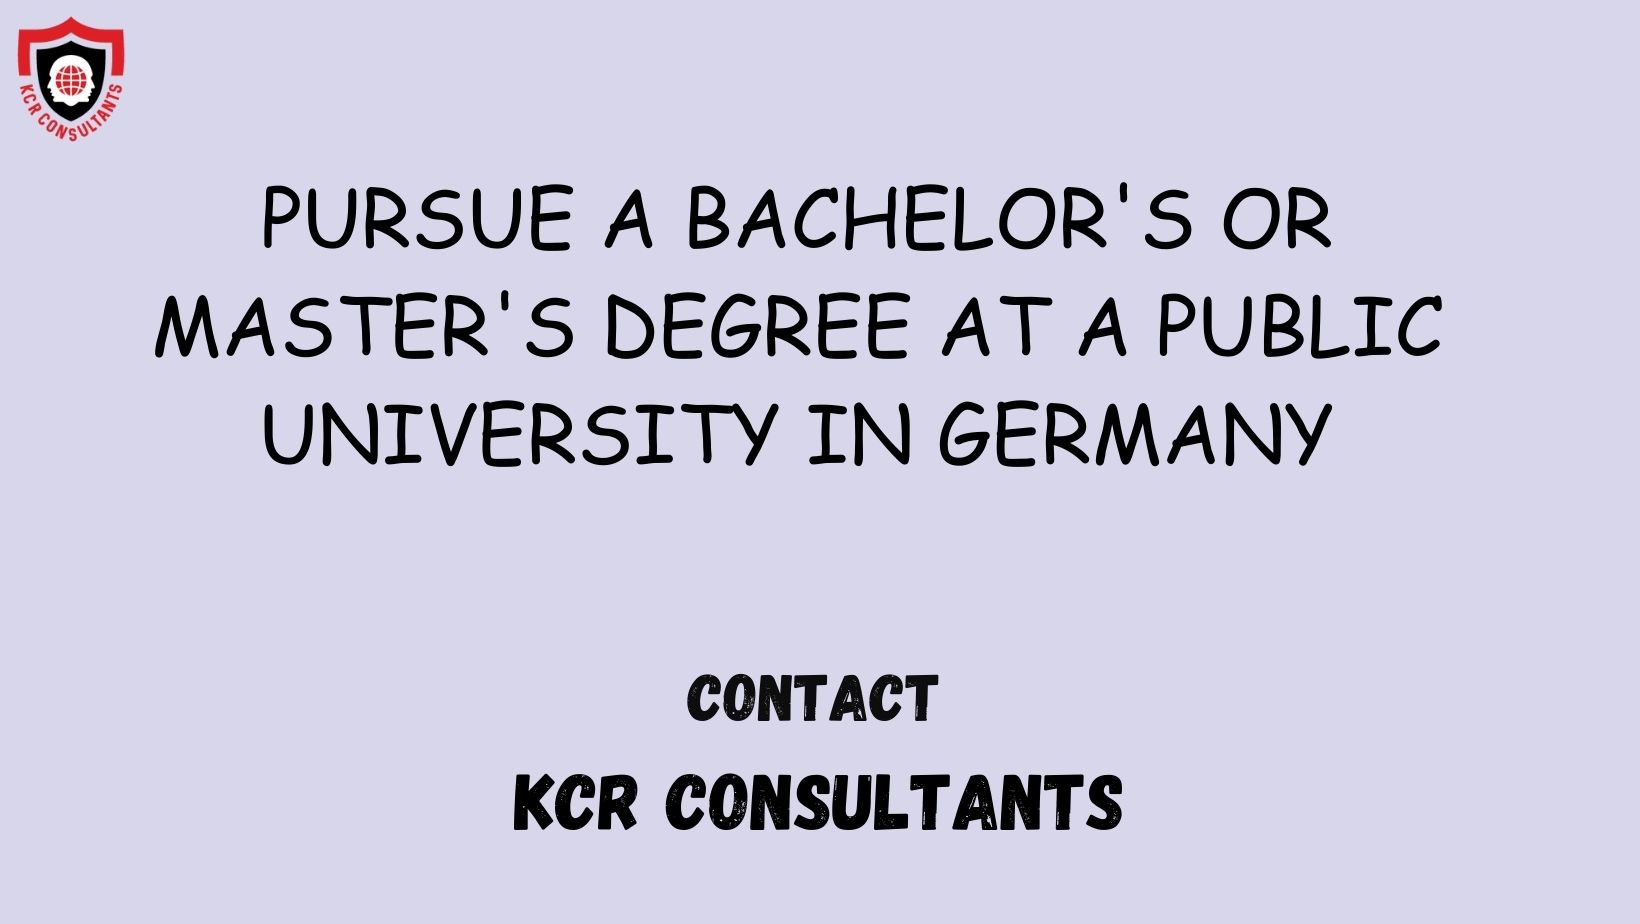 Bavaria - Contact US - KCR CONSULTANTS